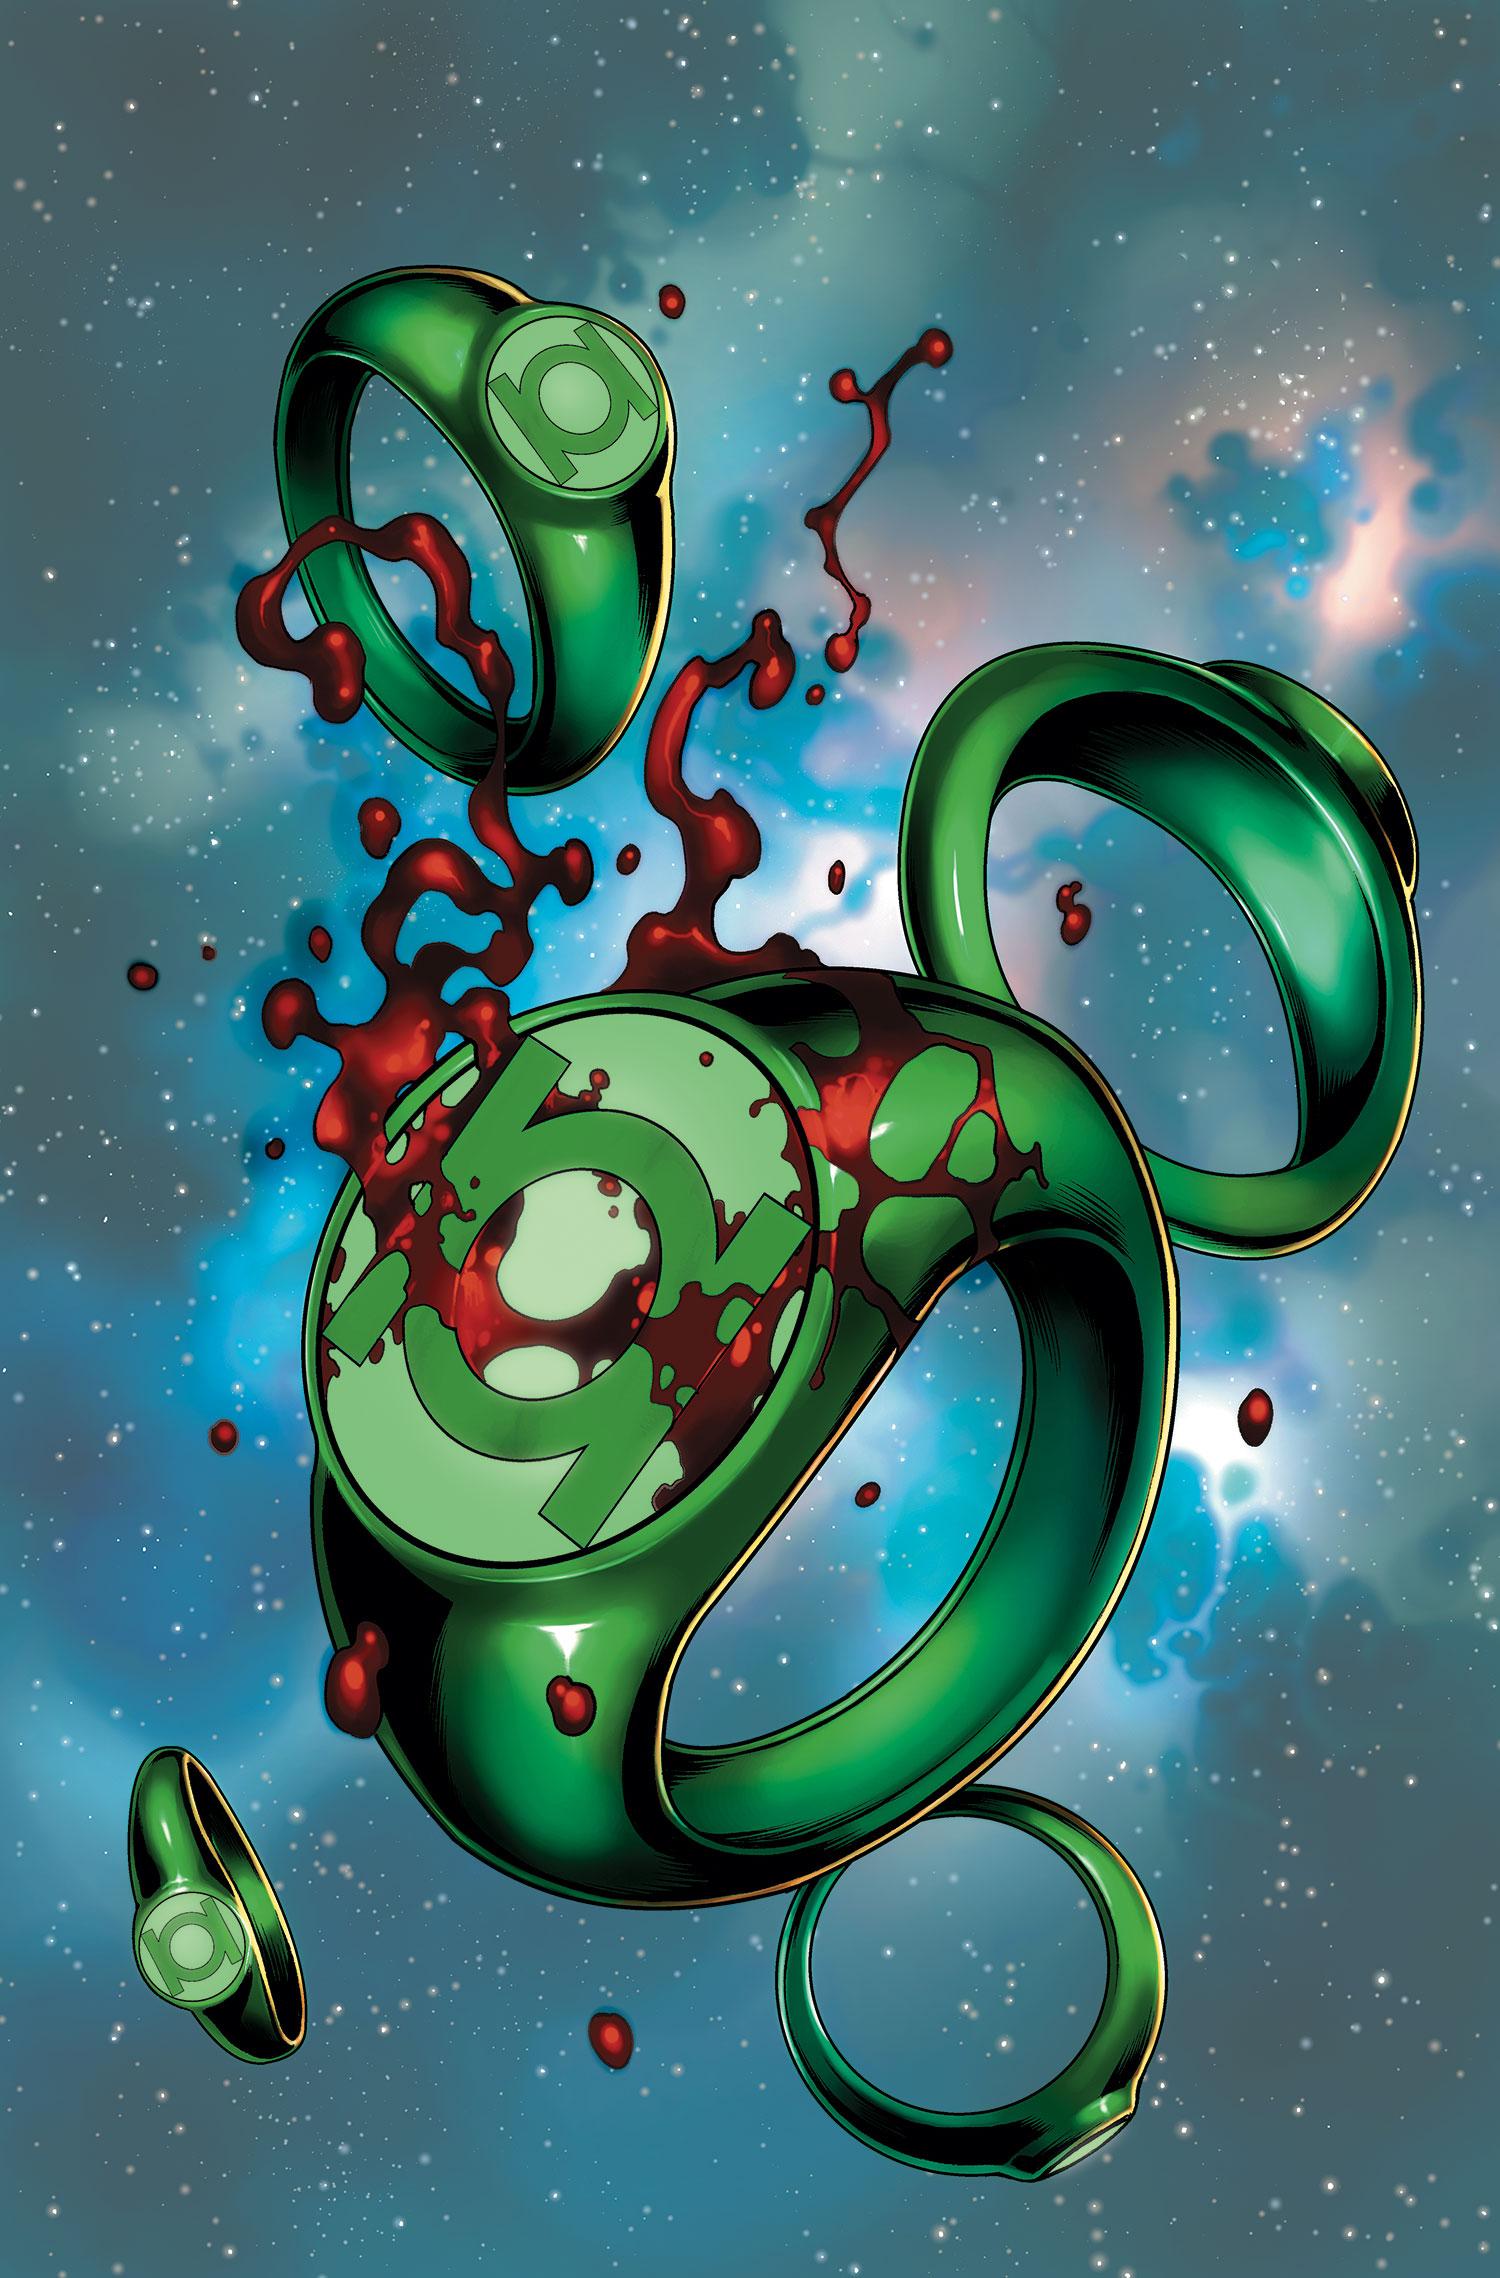 Green Lantern: The Lost Army Vol. 1 #1